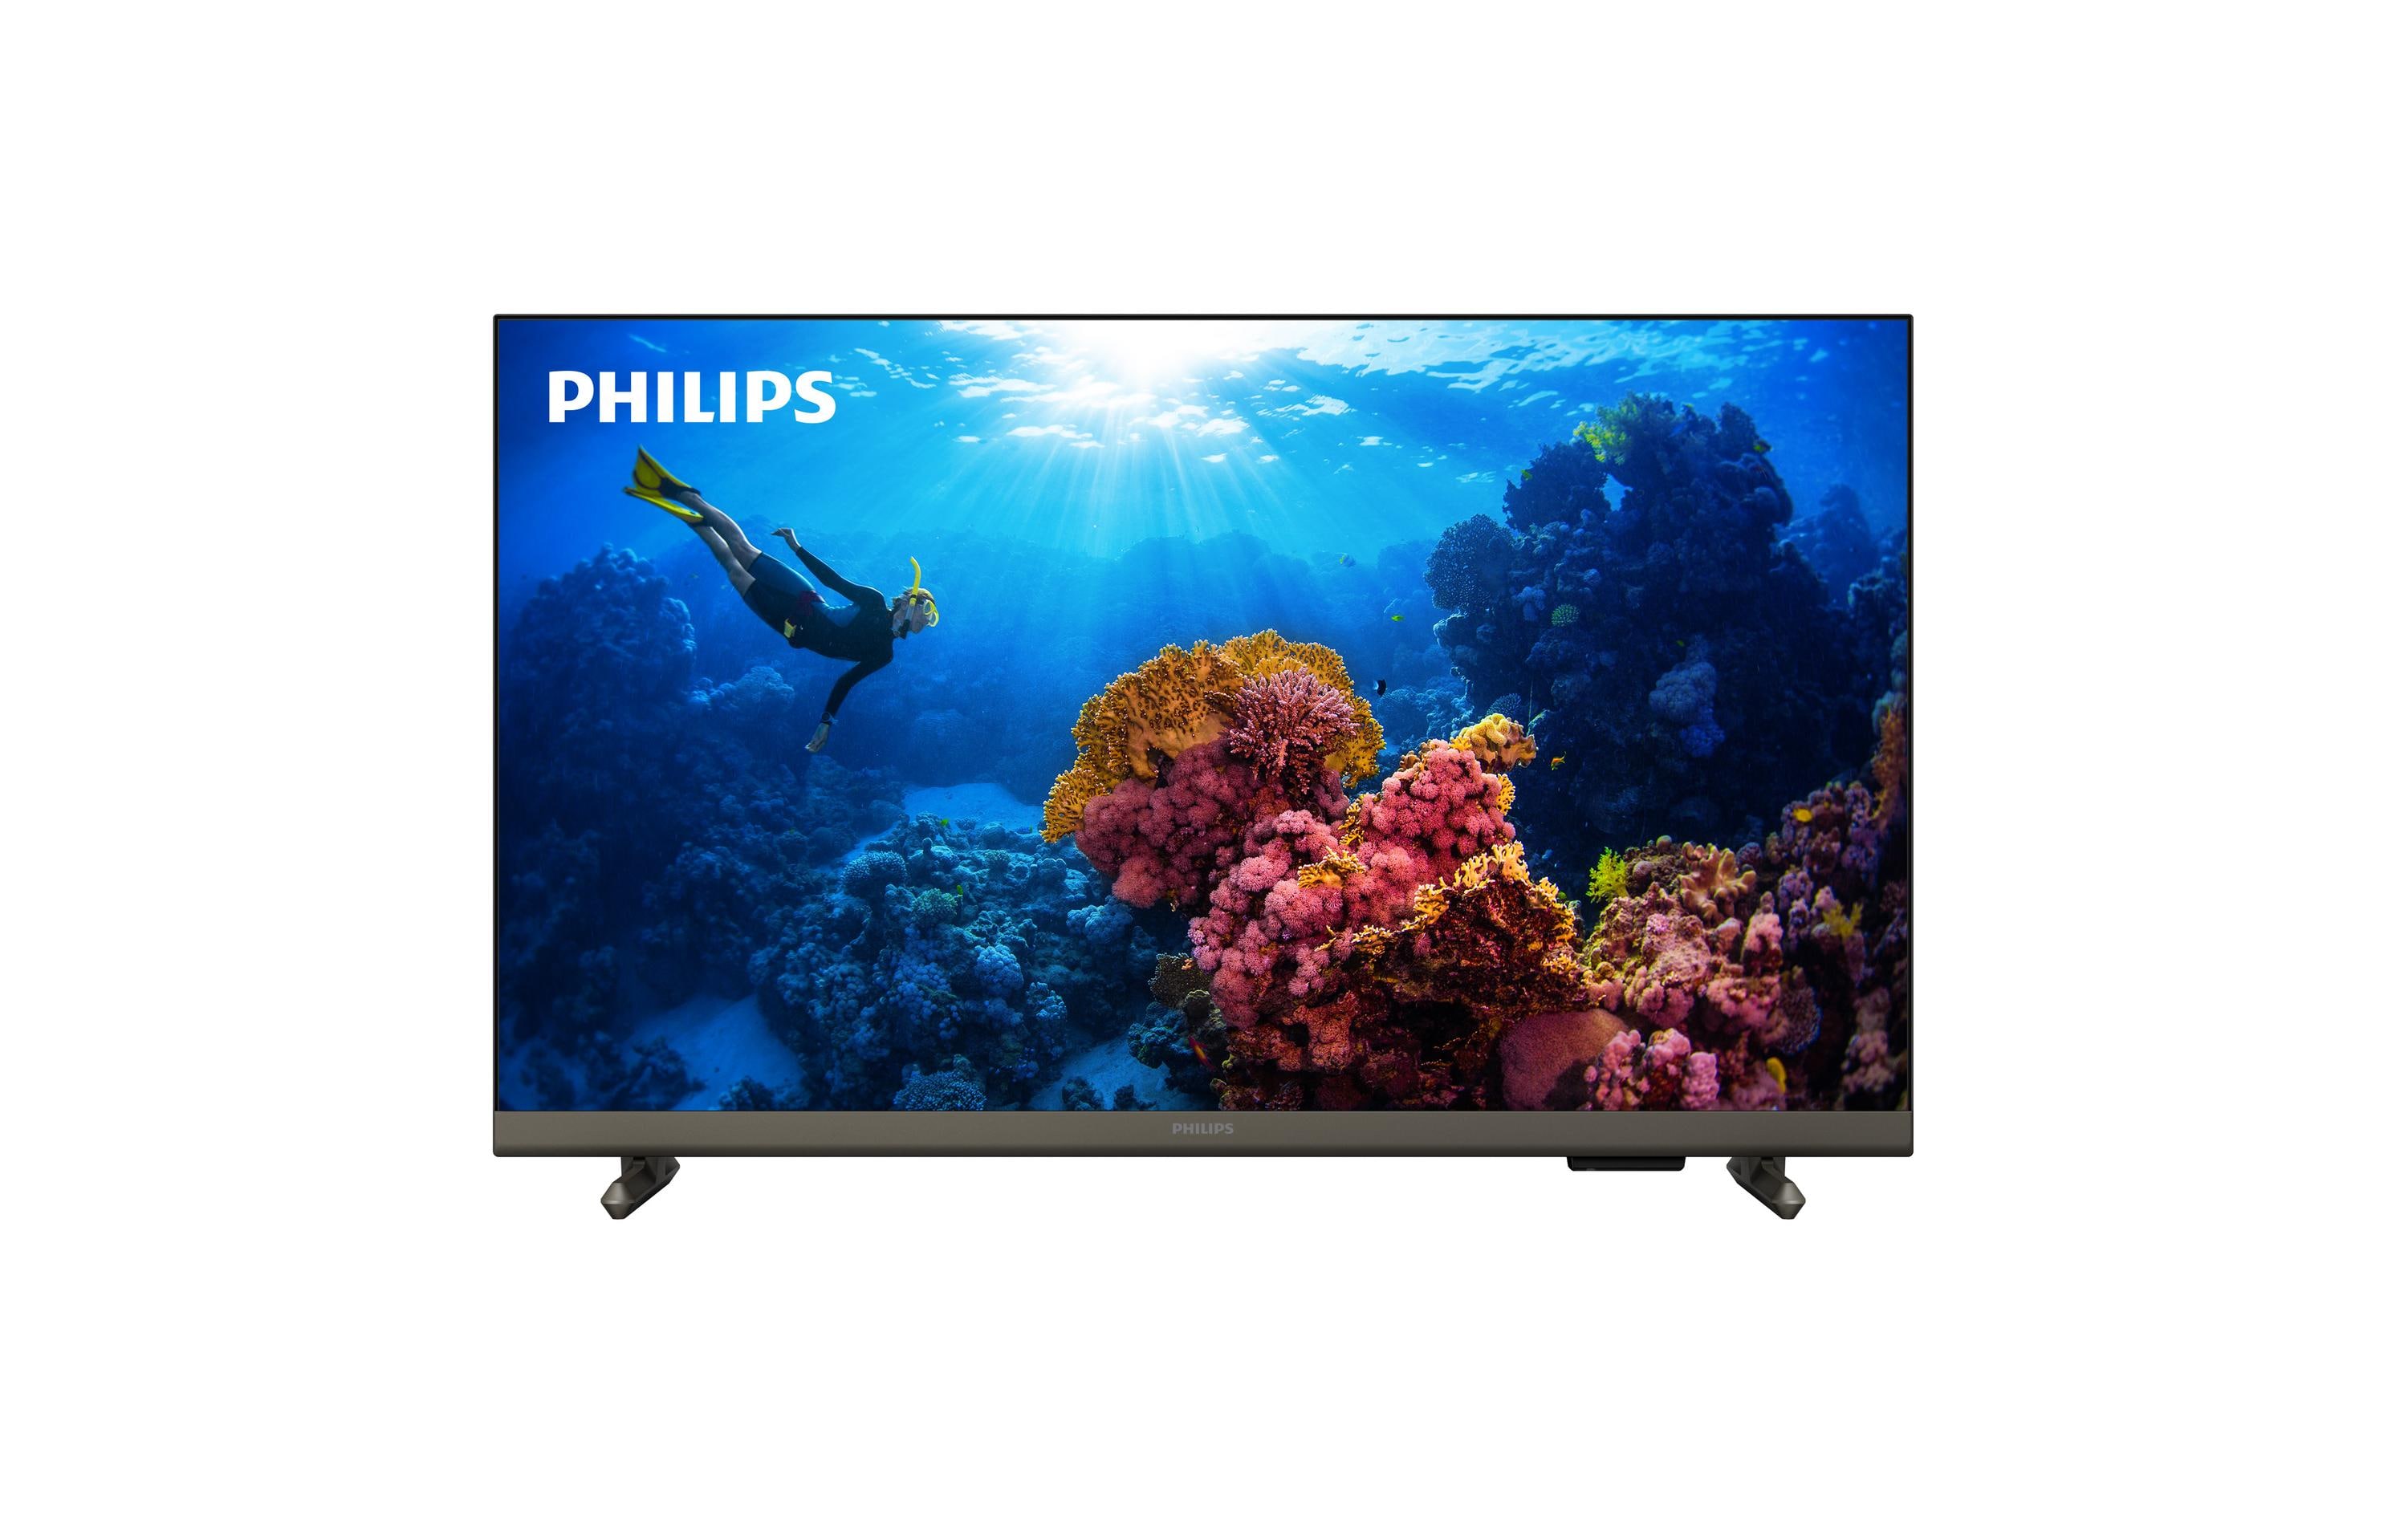 Philips TV 32PHS6808/12 32, 1280 x 720 (HD720), LED-LCD